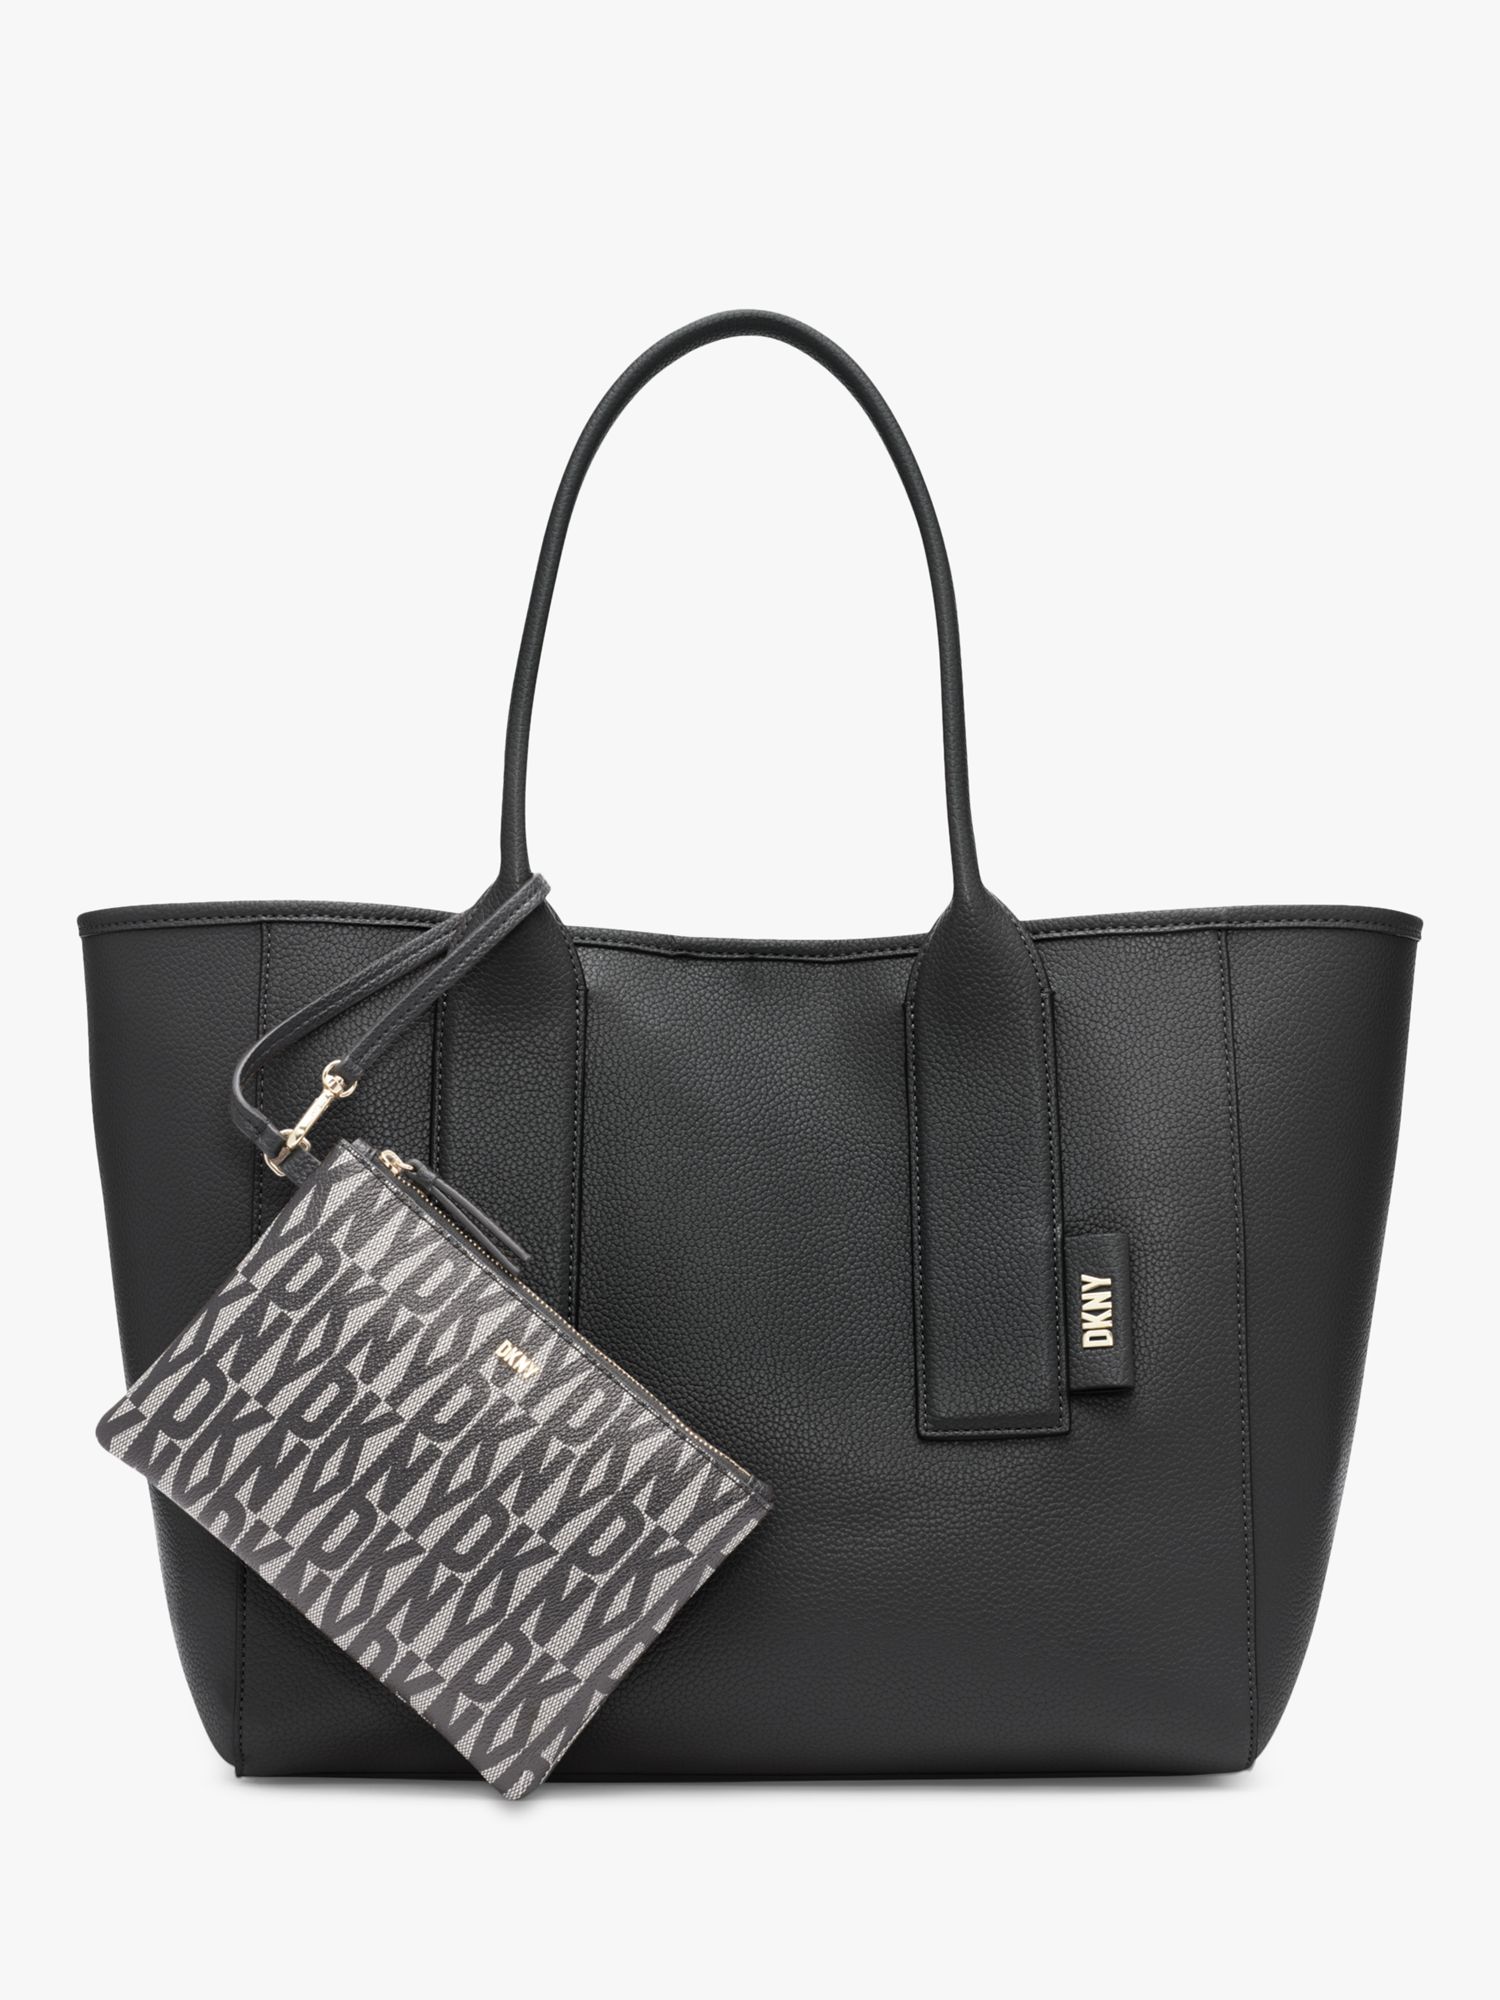 DKNY Grayson Tote Bag, Black/Gold